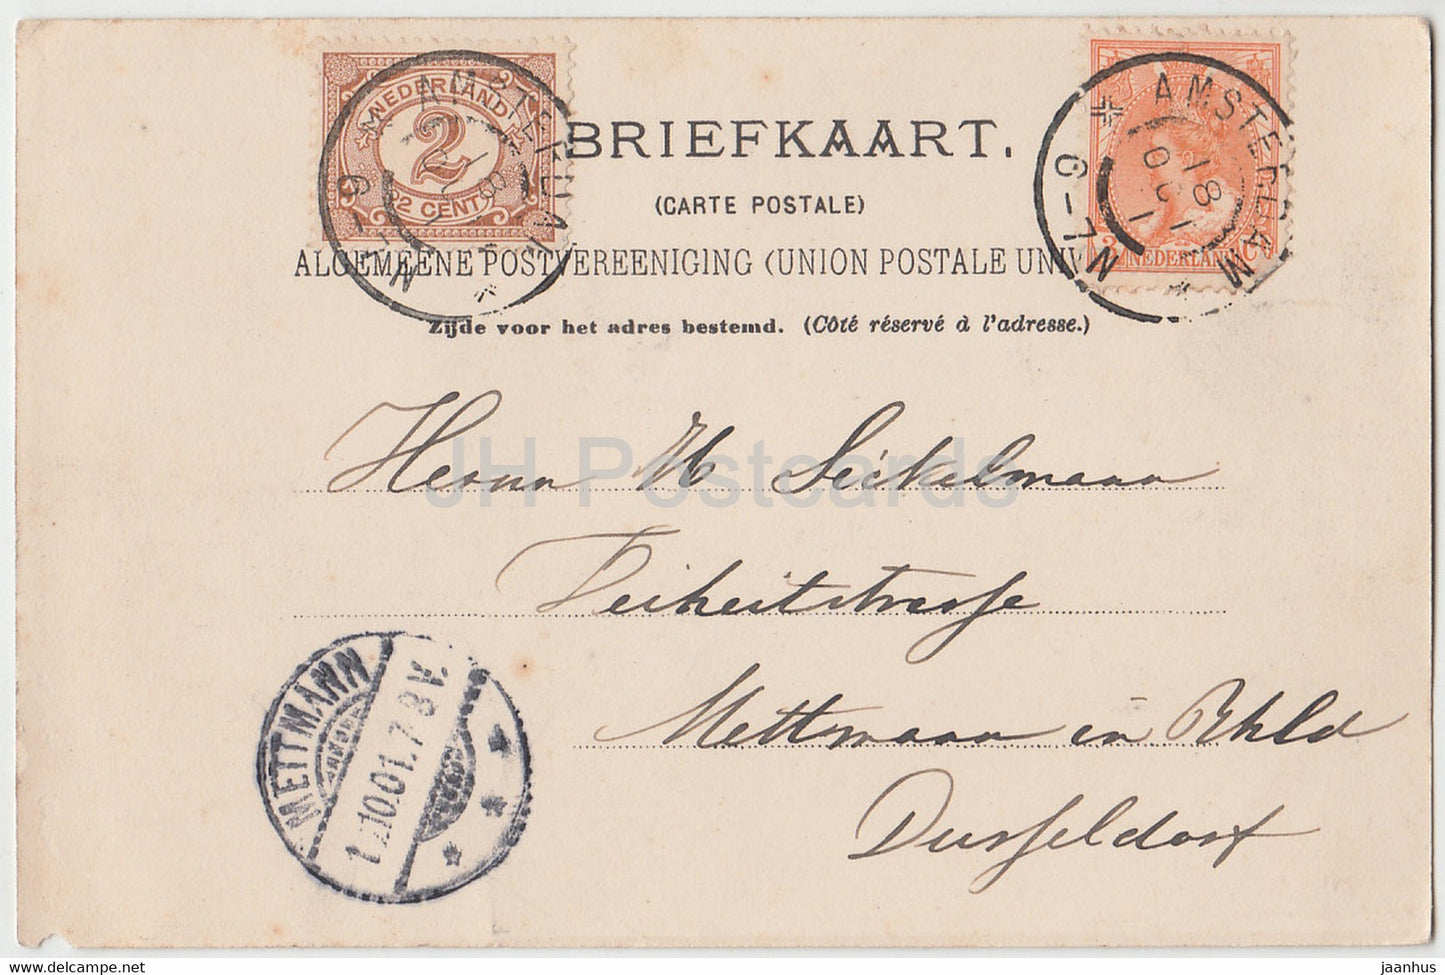 Amsterdam - Nieuwe Vaart - windmill - old postcard - 1901 - Netherlands - used